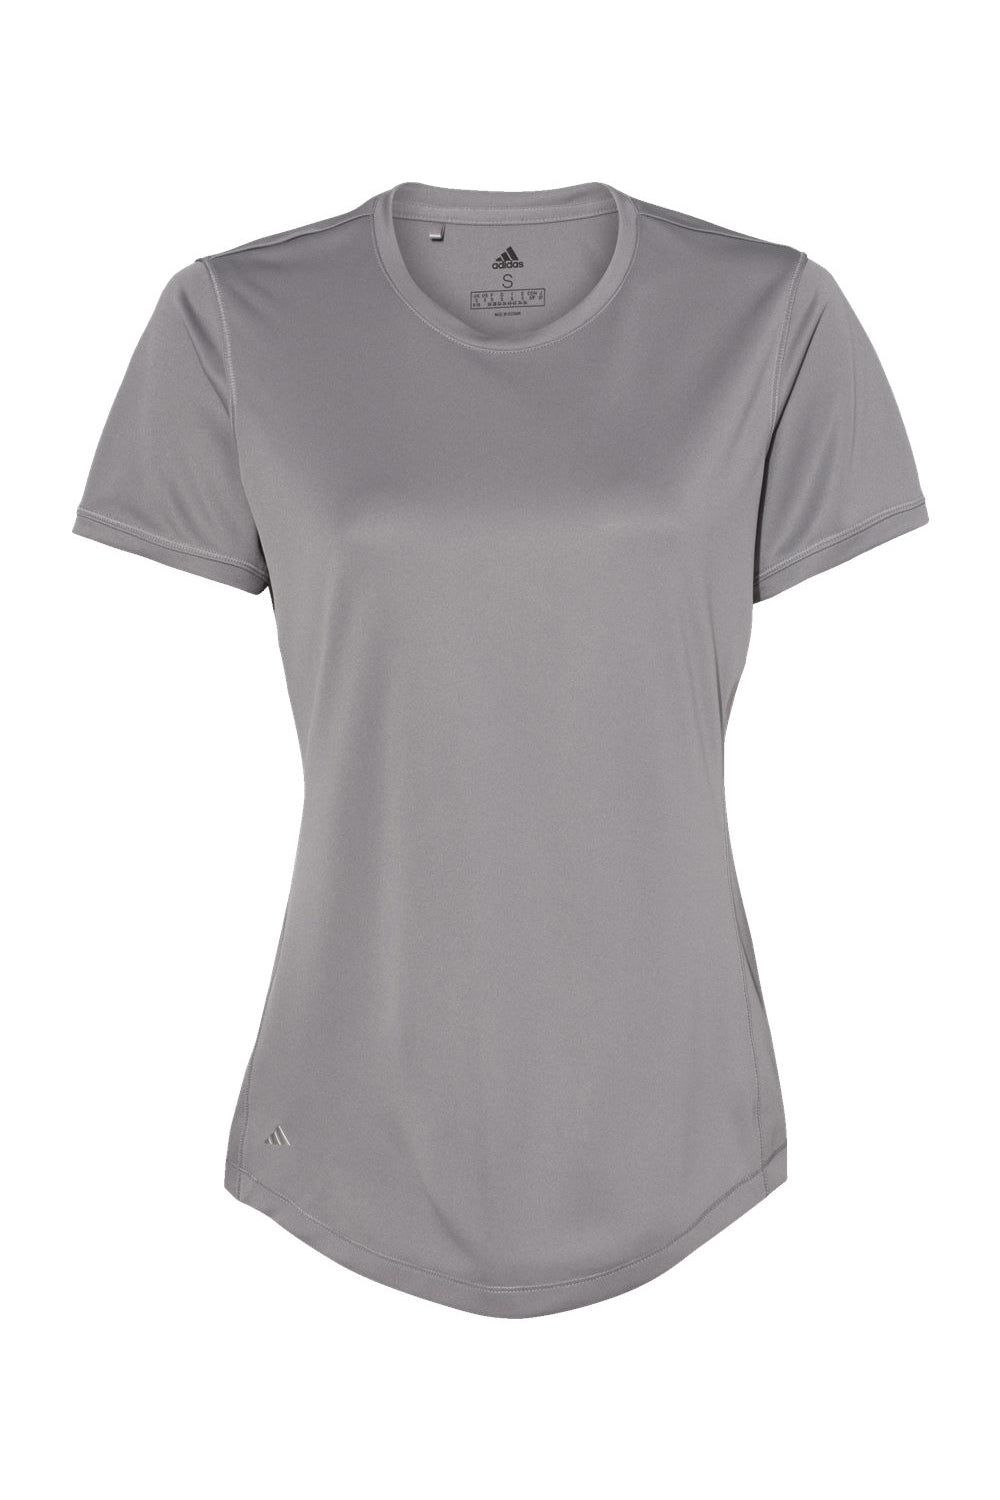 Adidas A377 Womens UPF 50+ Short Sleeve Crewneck T-Shirt Grey Flat Front